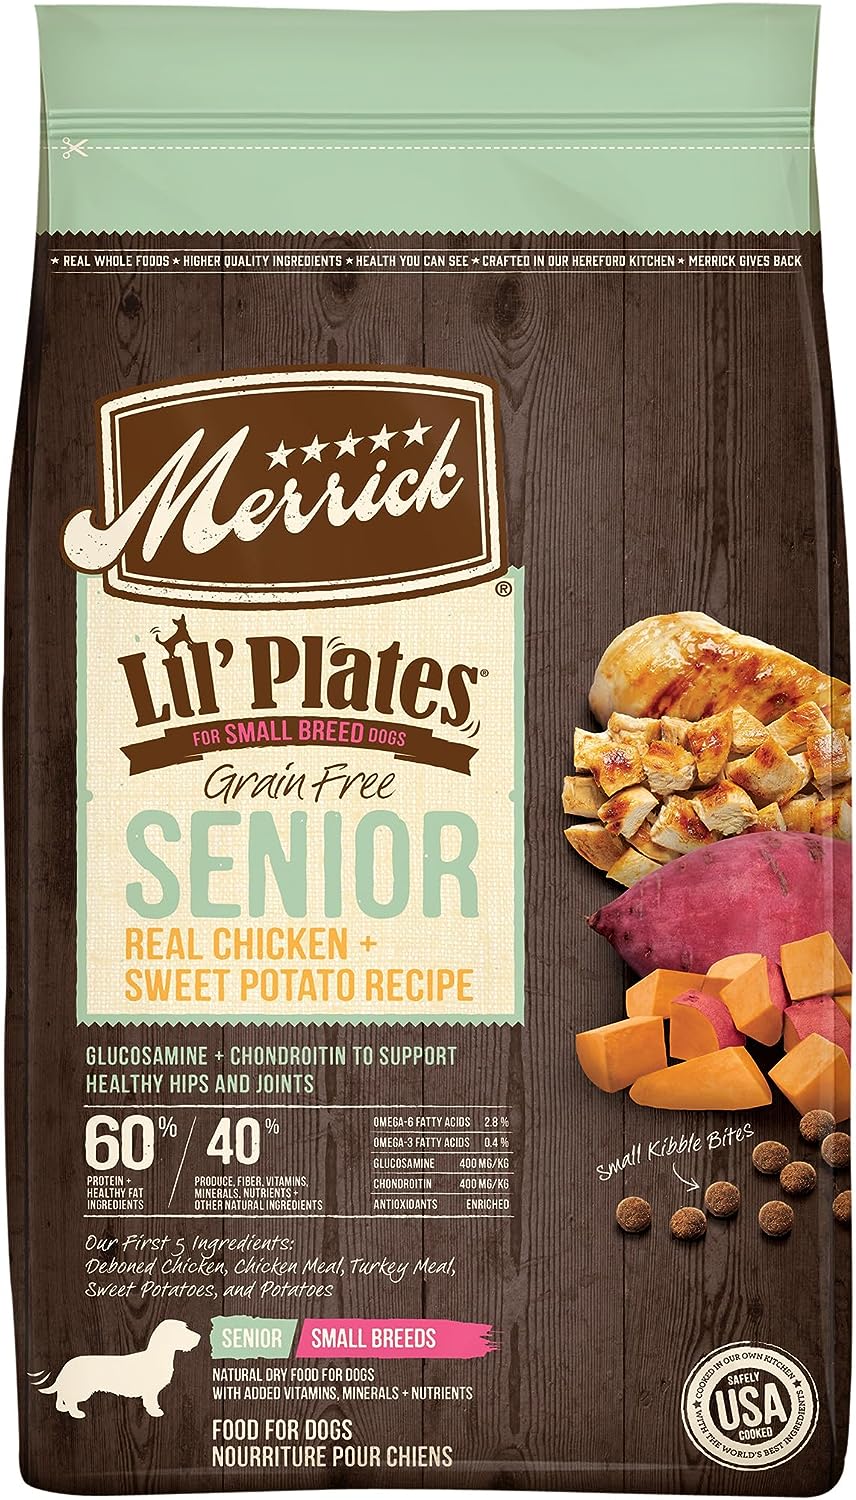 Merrick Lil’ Plates Grain-Free Senior Real Chicken + Sweet Potato Recipe Dry Dog Food – Gallery Image 1